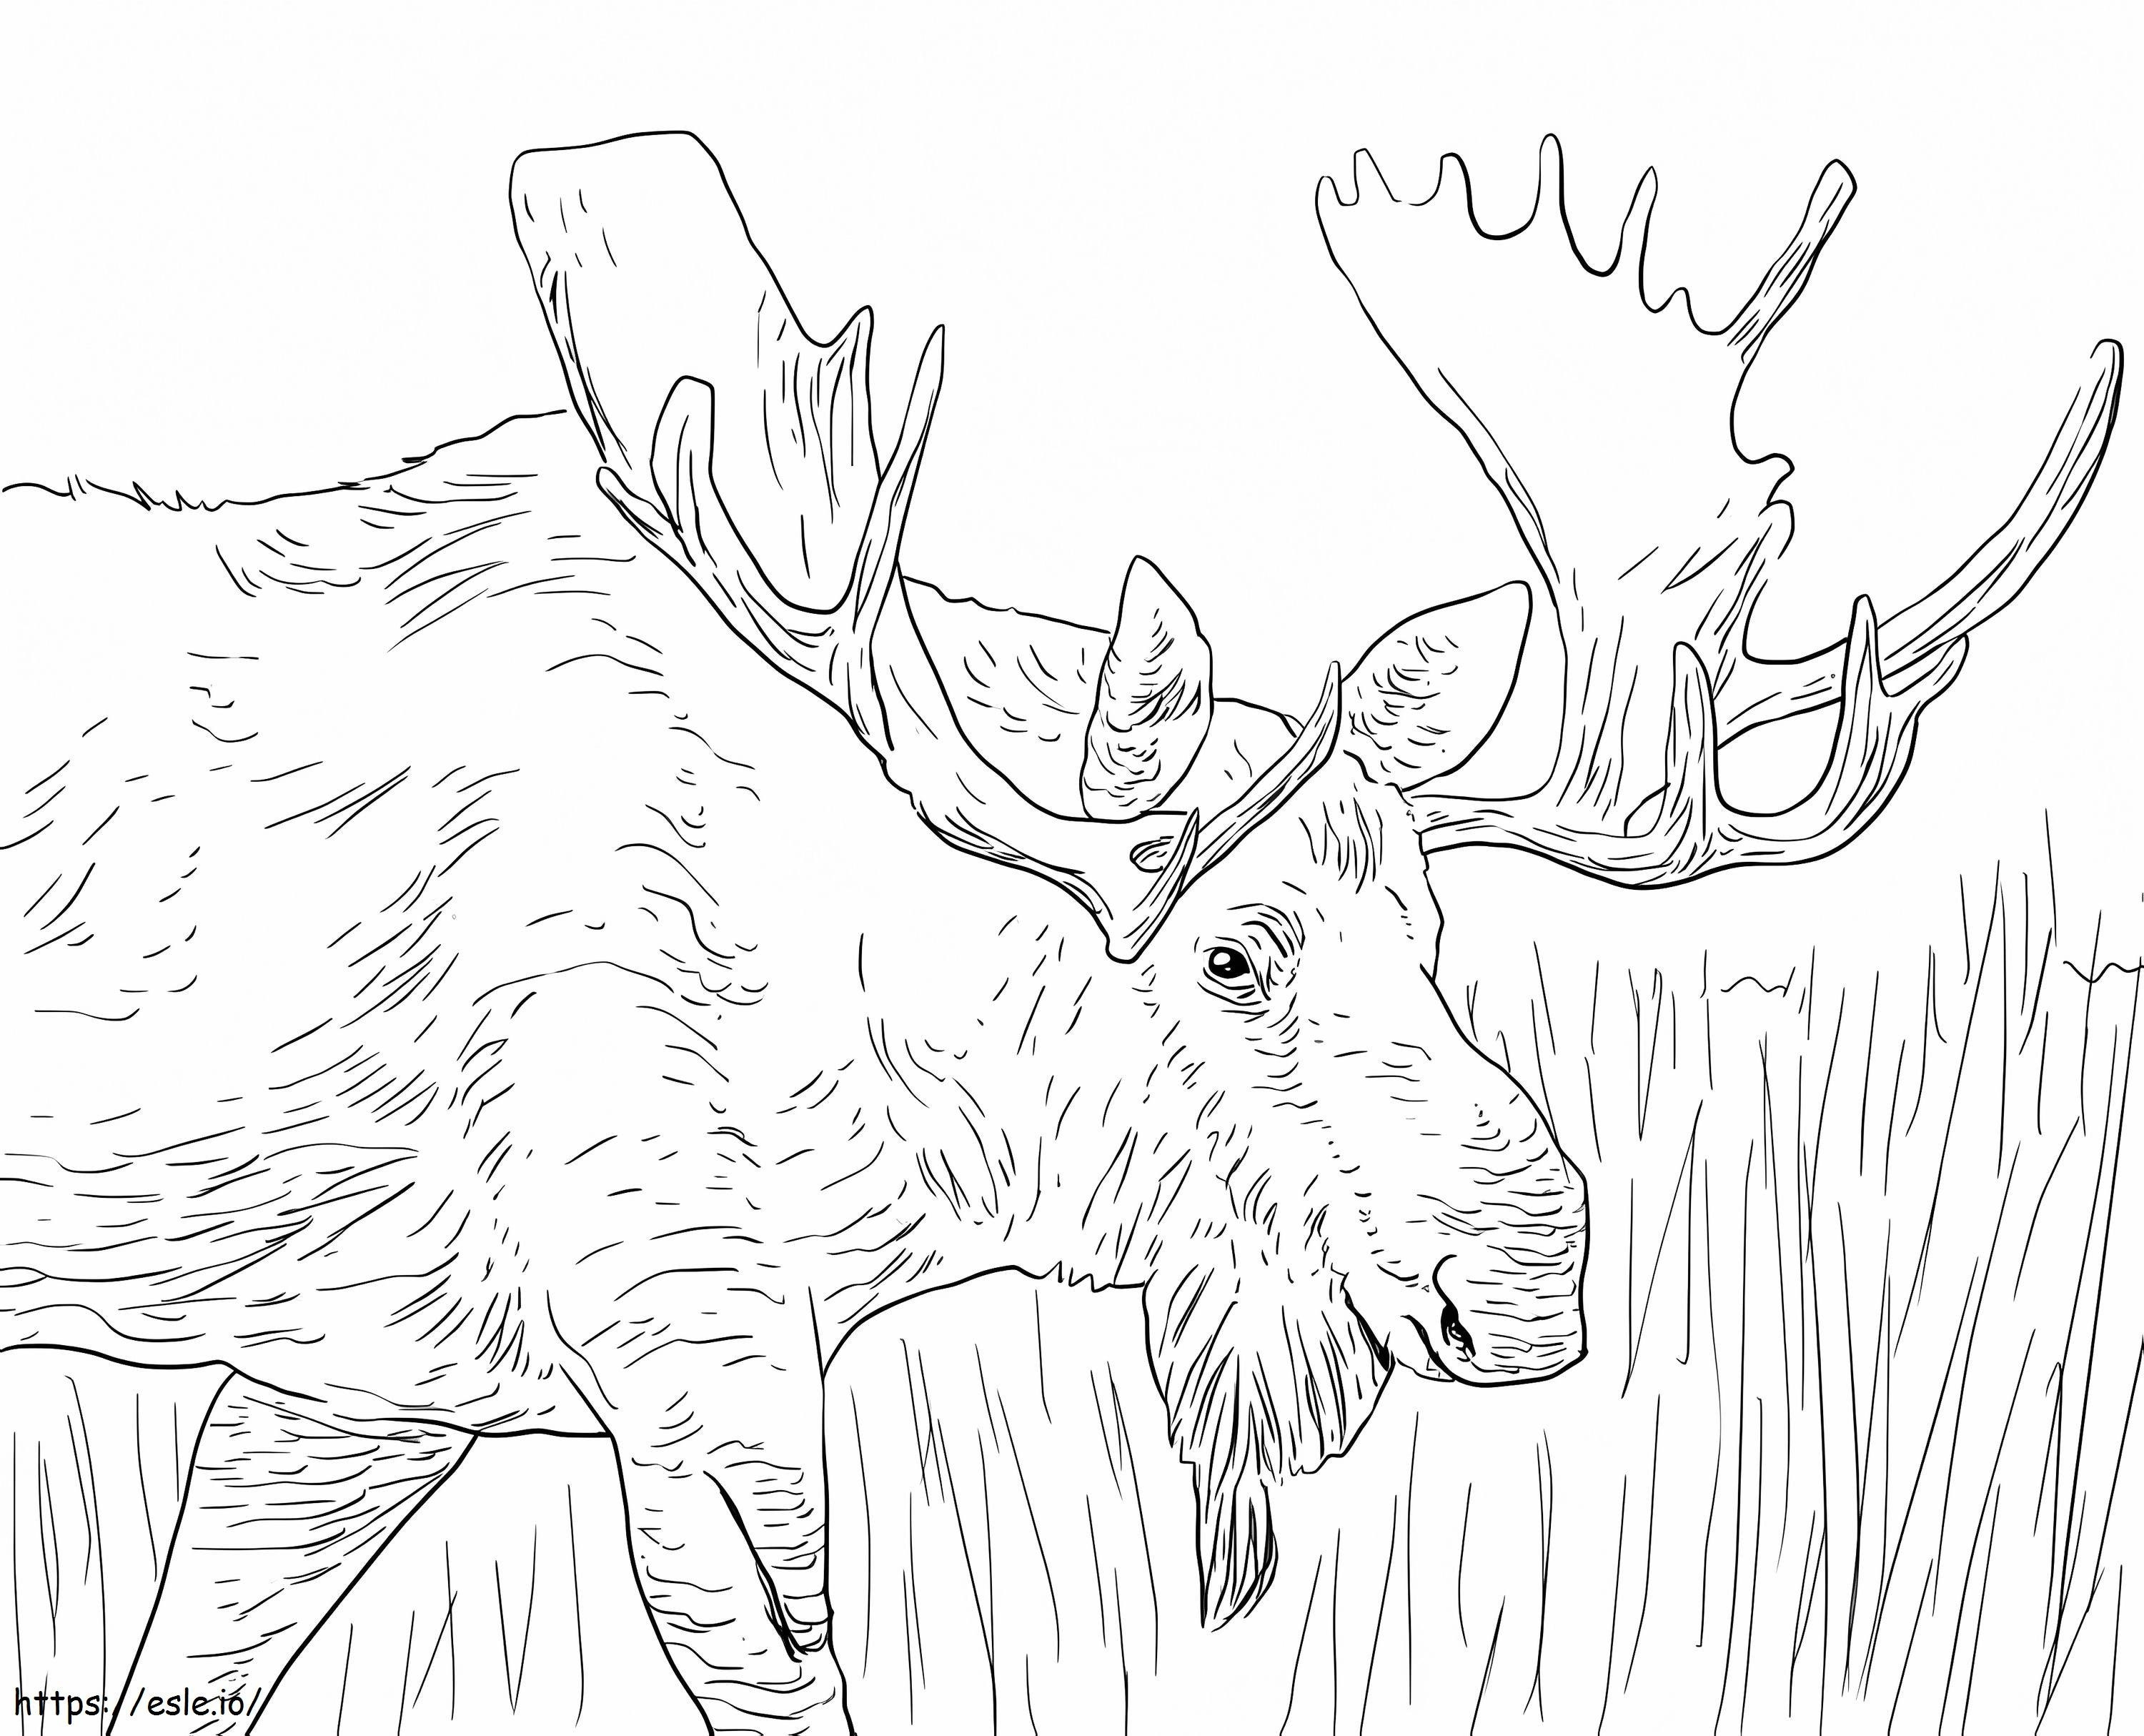 Alaska Moose coloring page